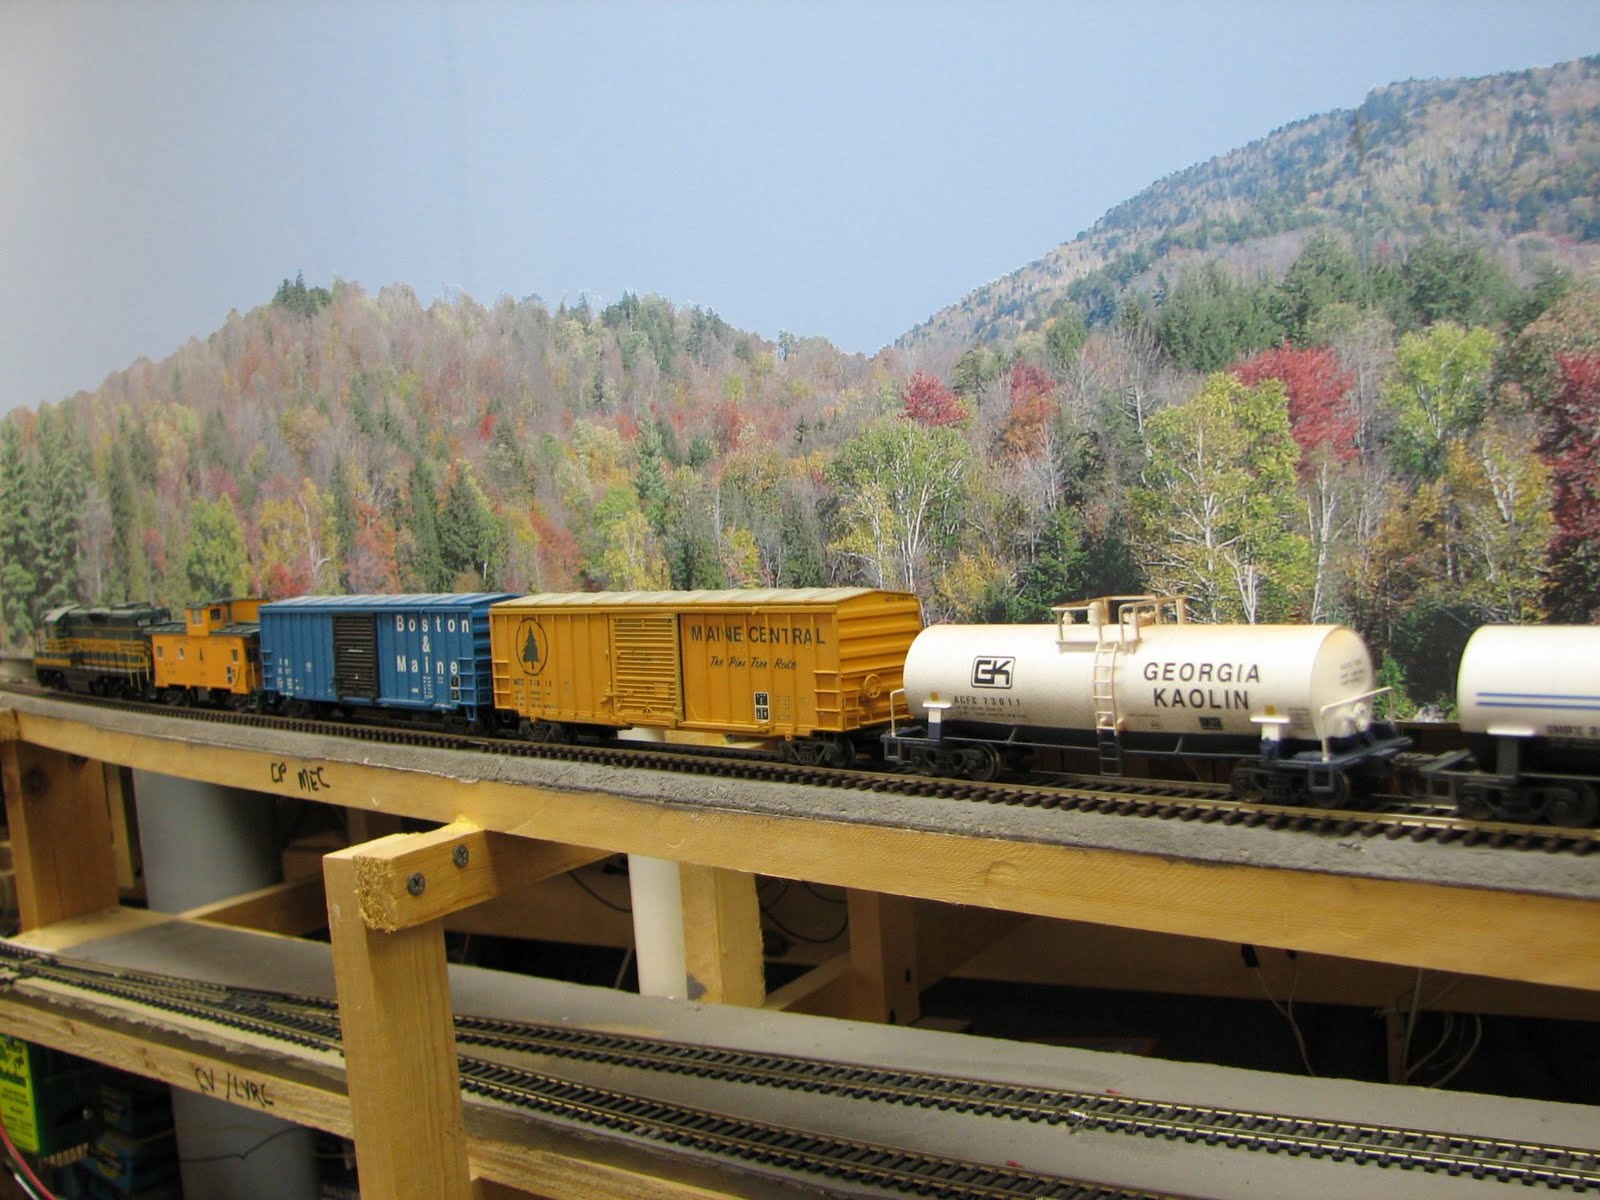 Mike McNamara's Northeast Kingdom Model Railroad: Photo Backdrops